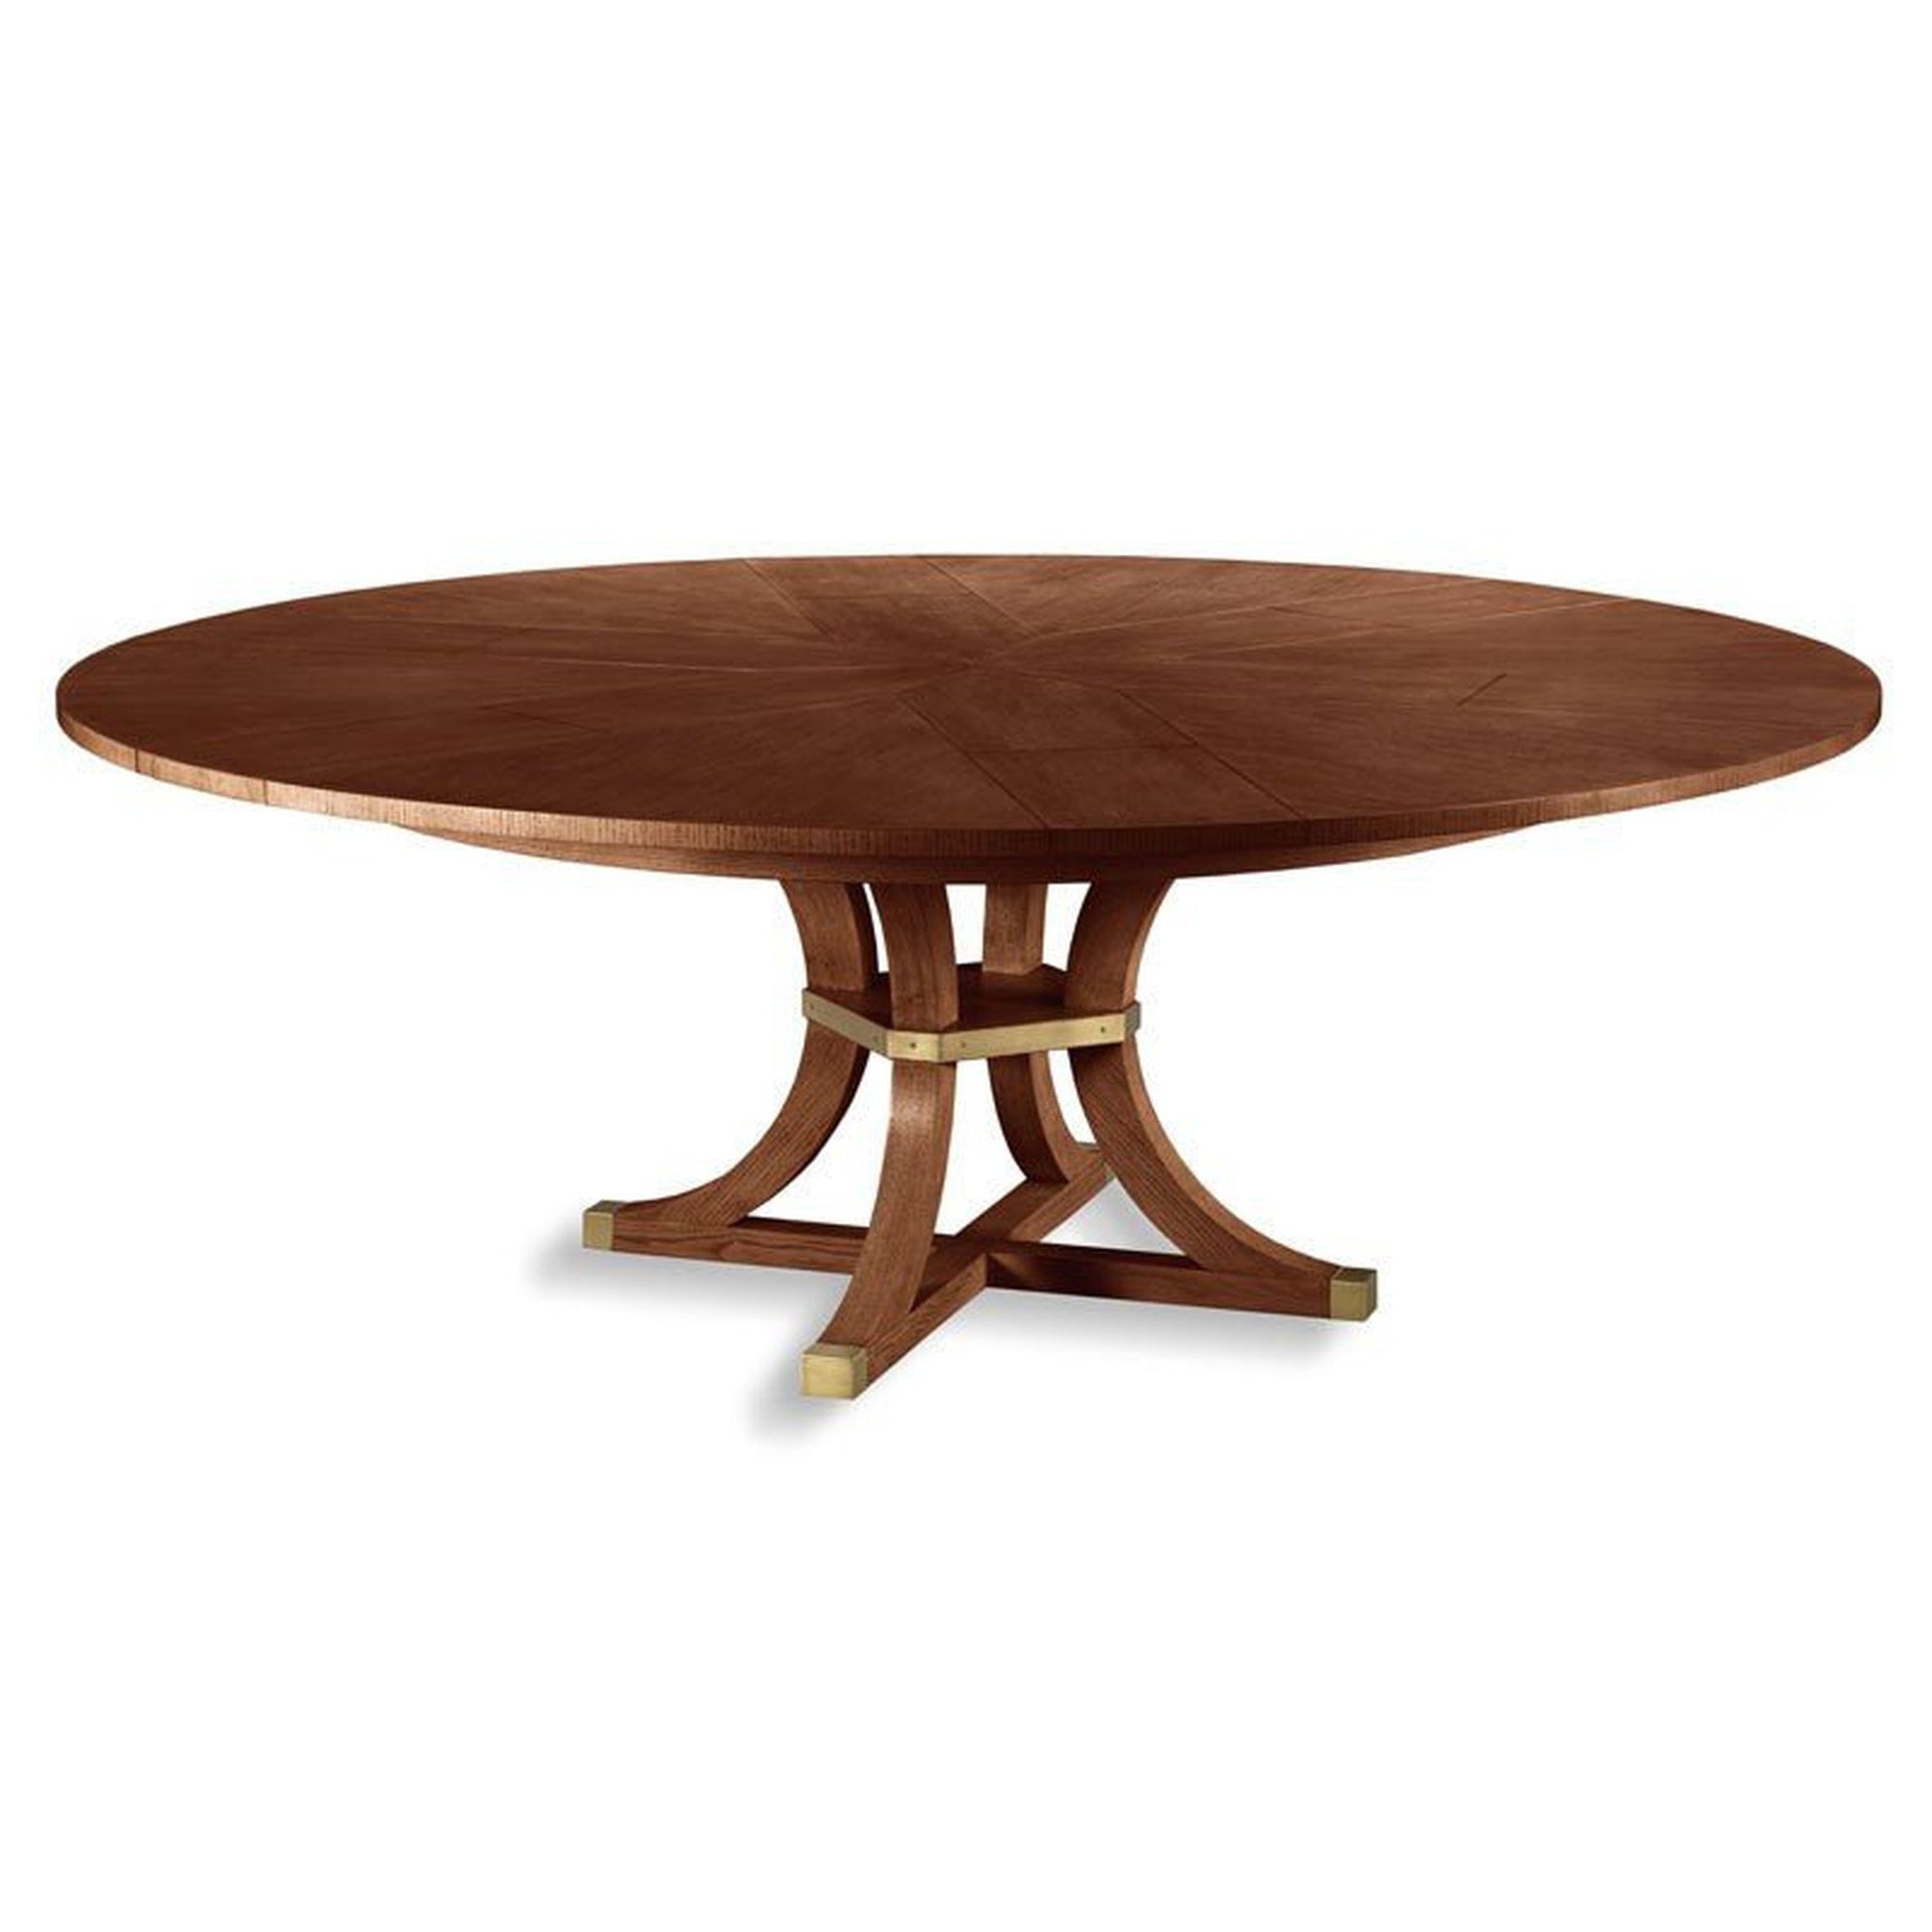 WoodBridge Furniture Apollo Jupe Dining Table - 5094-10 - 5094-10 - WoodBridge Furniture - $8179.50